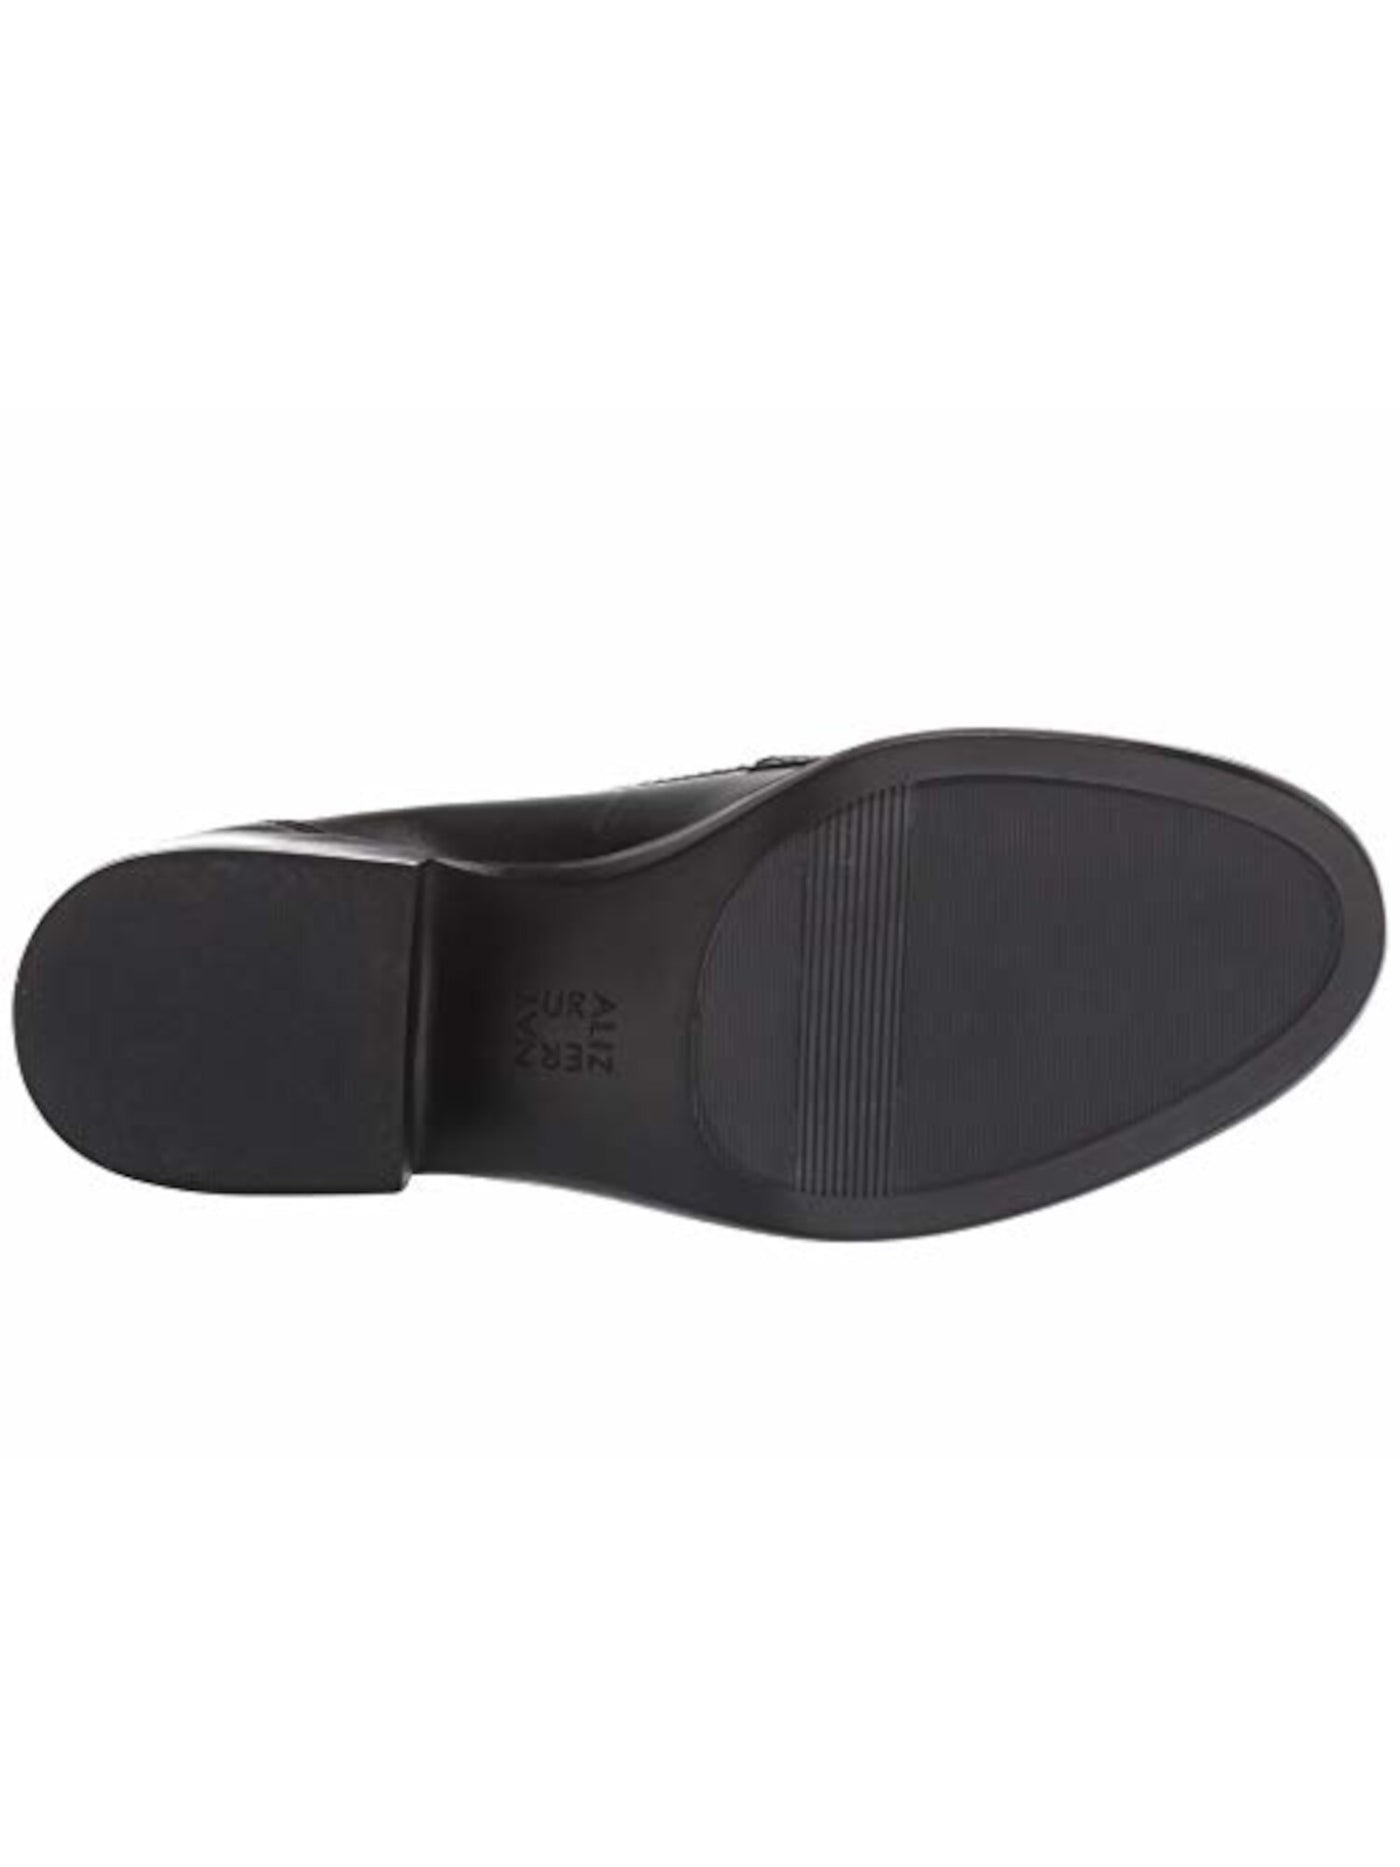 NATURALIZER Womens Black Padded Metallic Embellished Perla Round Toe Block Heel Slip On Leather Loafers Shoes M